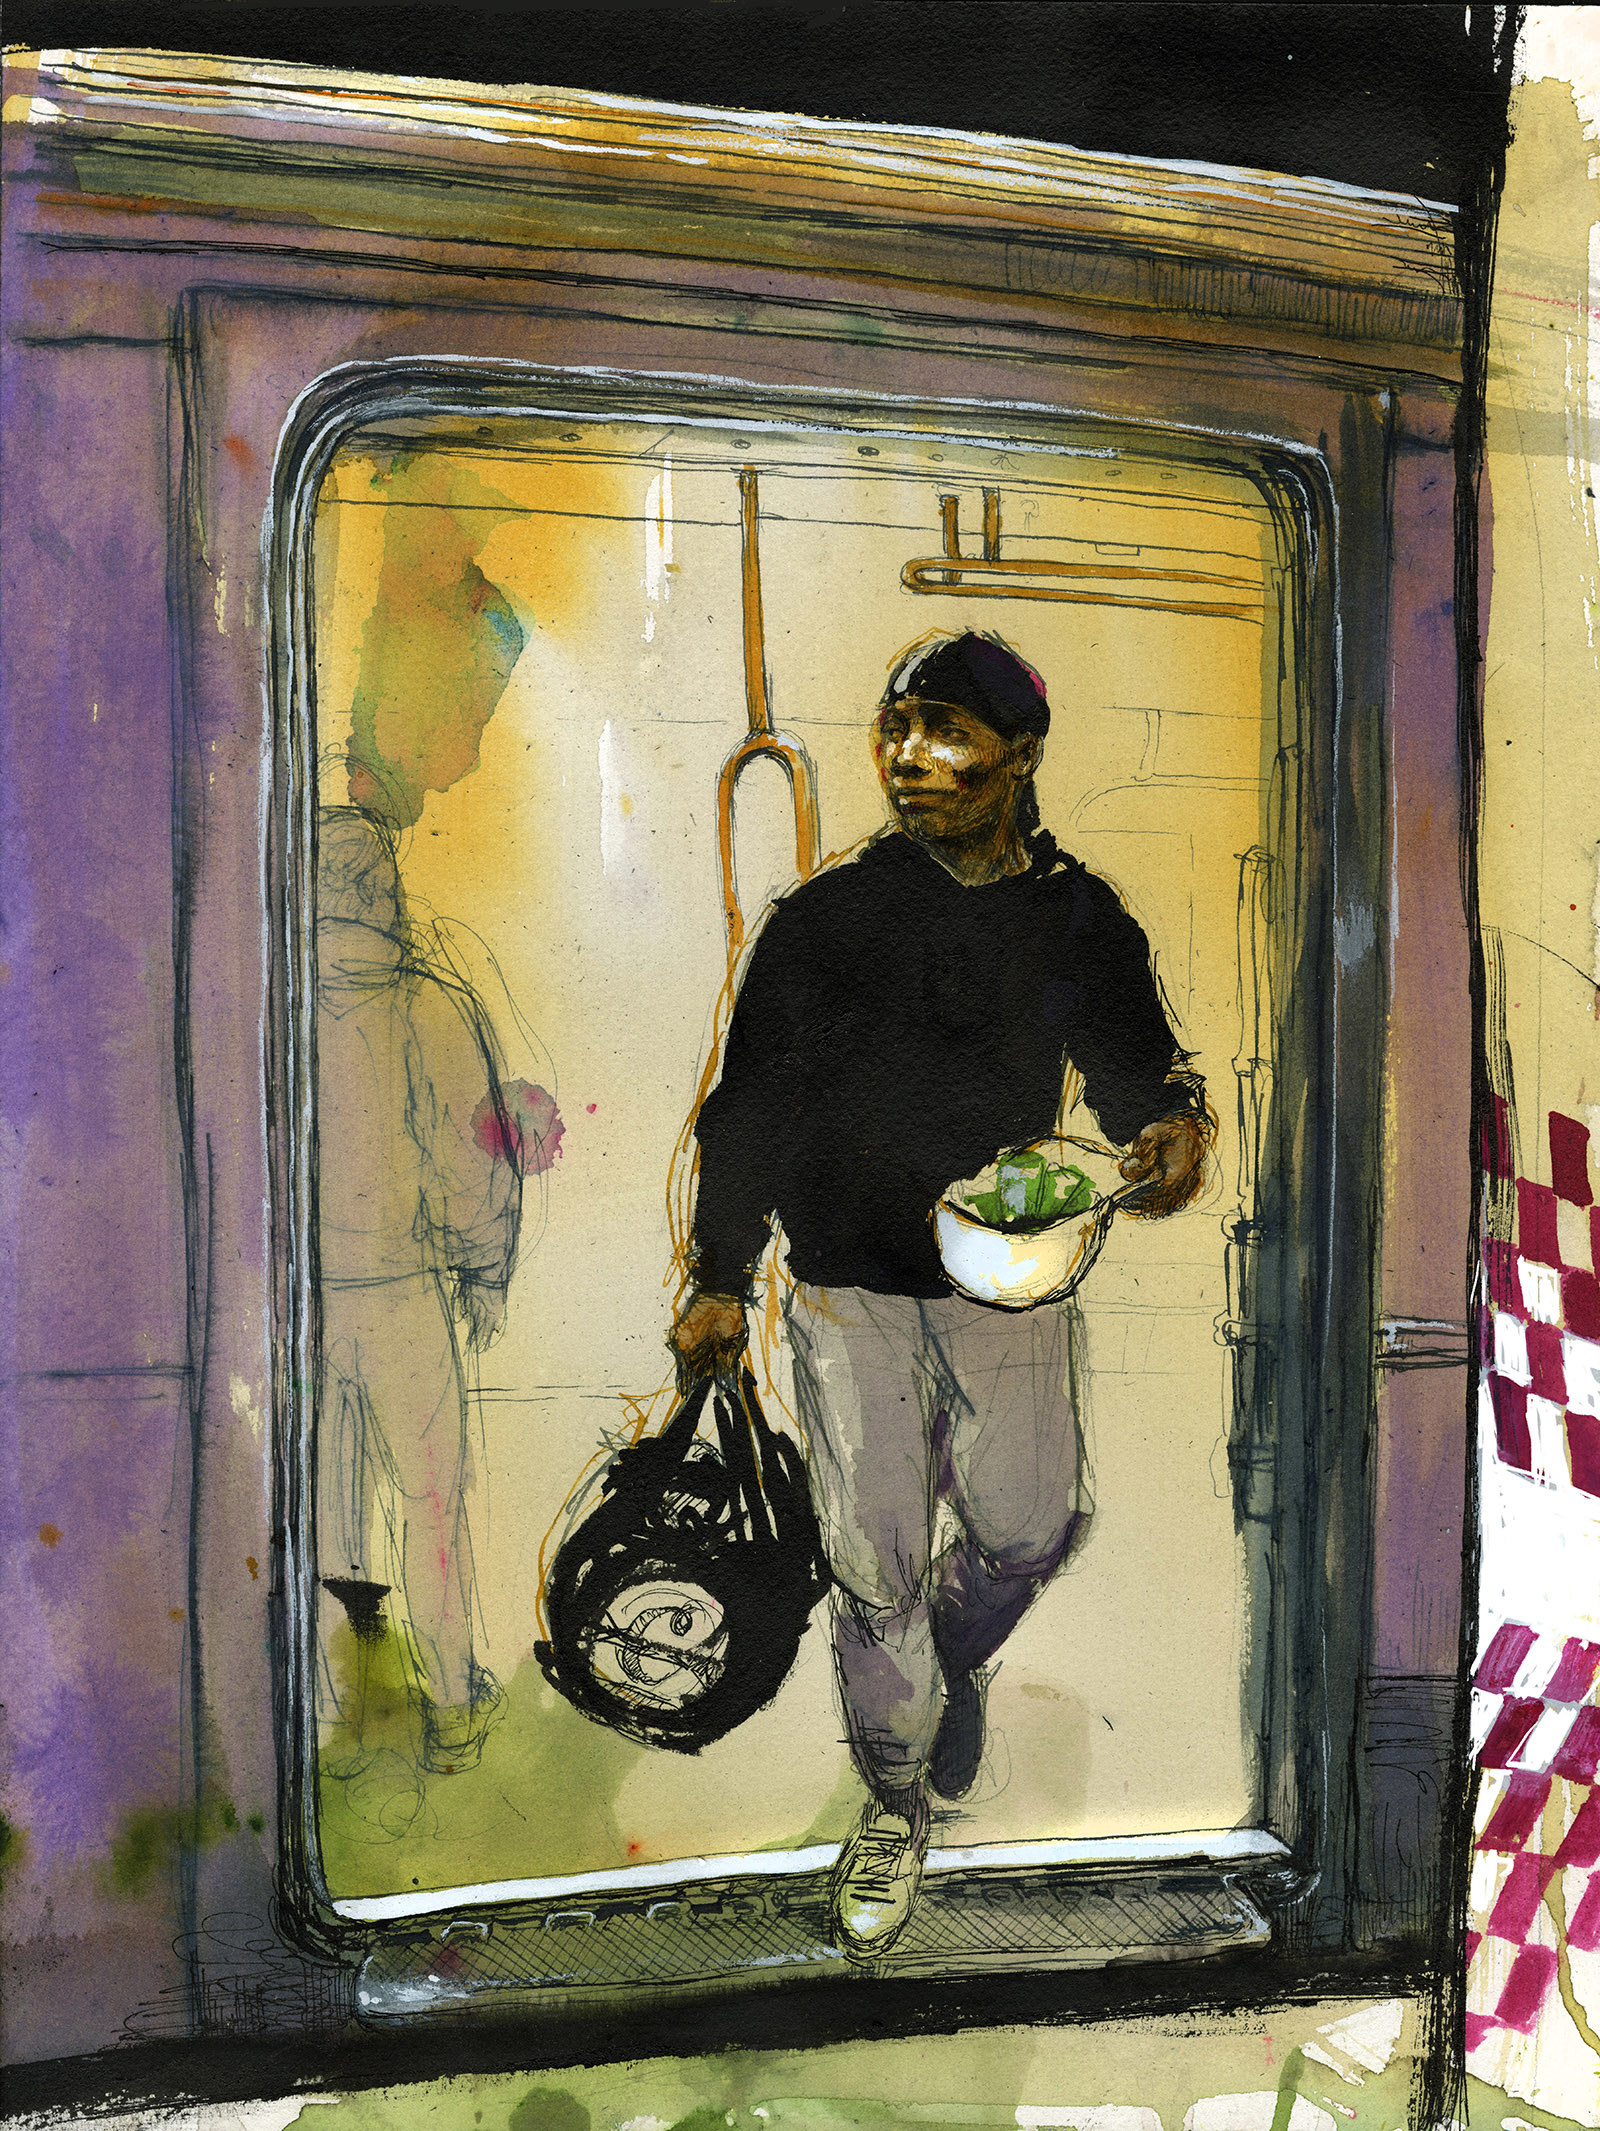 An illustration shows a man exiting a subway car carrying a duffel bag and a baseball cap full of cash